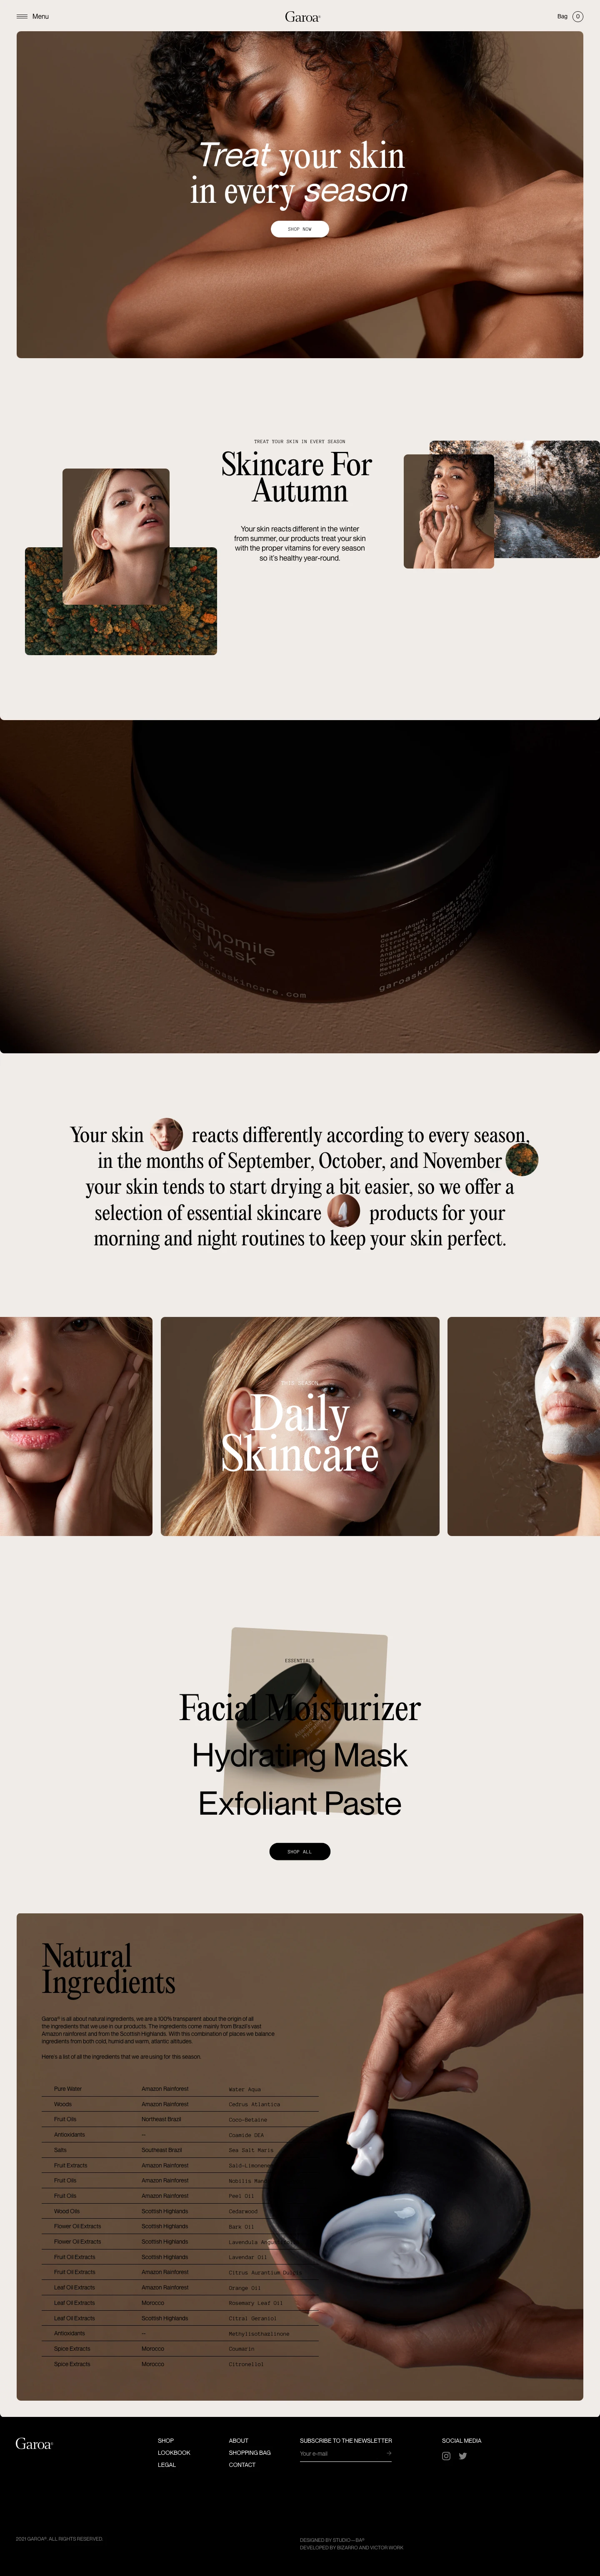 Garoa Skincare Landing Page Example: Treat your skin in every season.